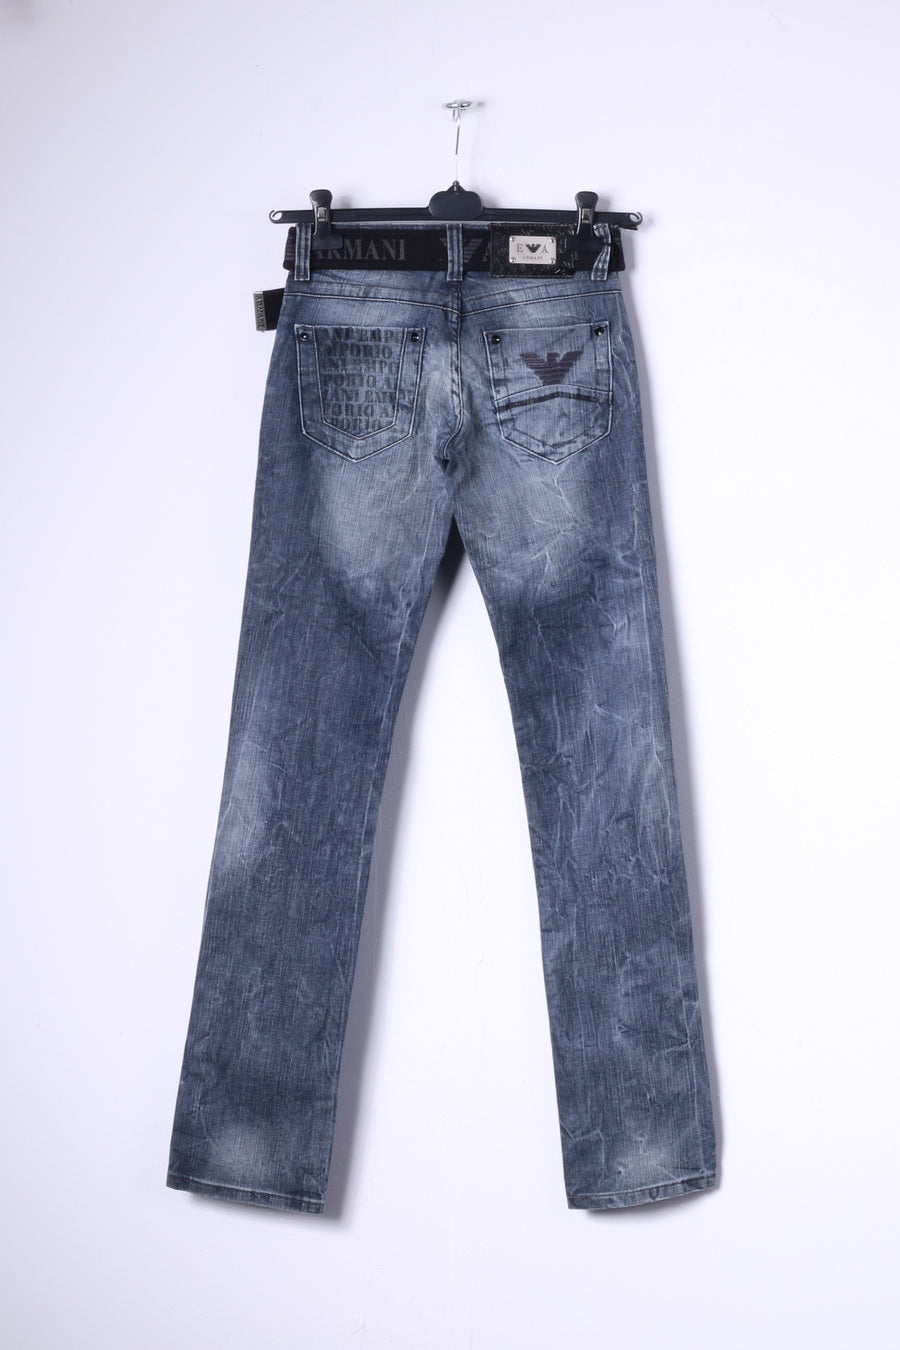 Armani Jeans Womens W27 L32 Trousers Navy Denim Cotton Straight Leg Pants